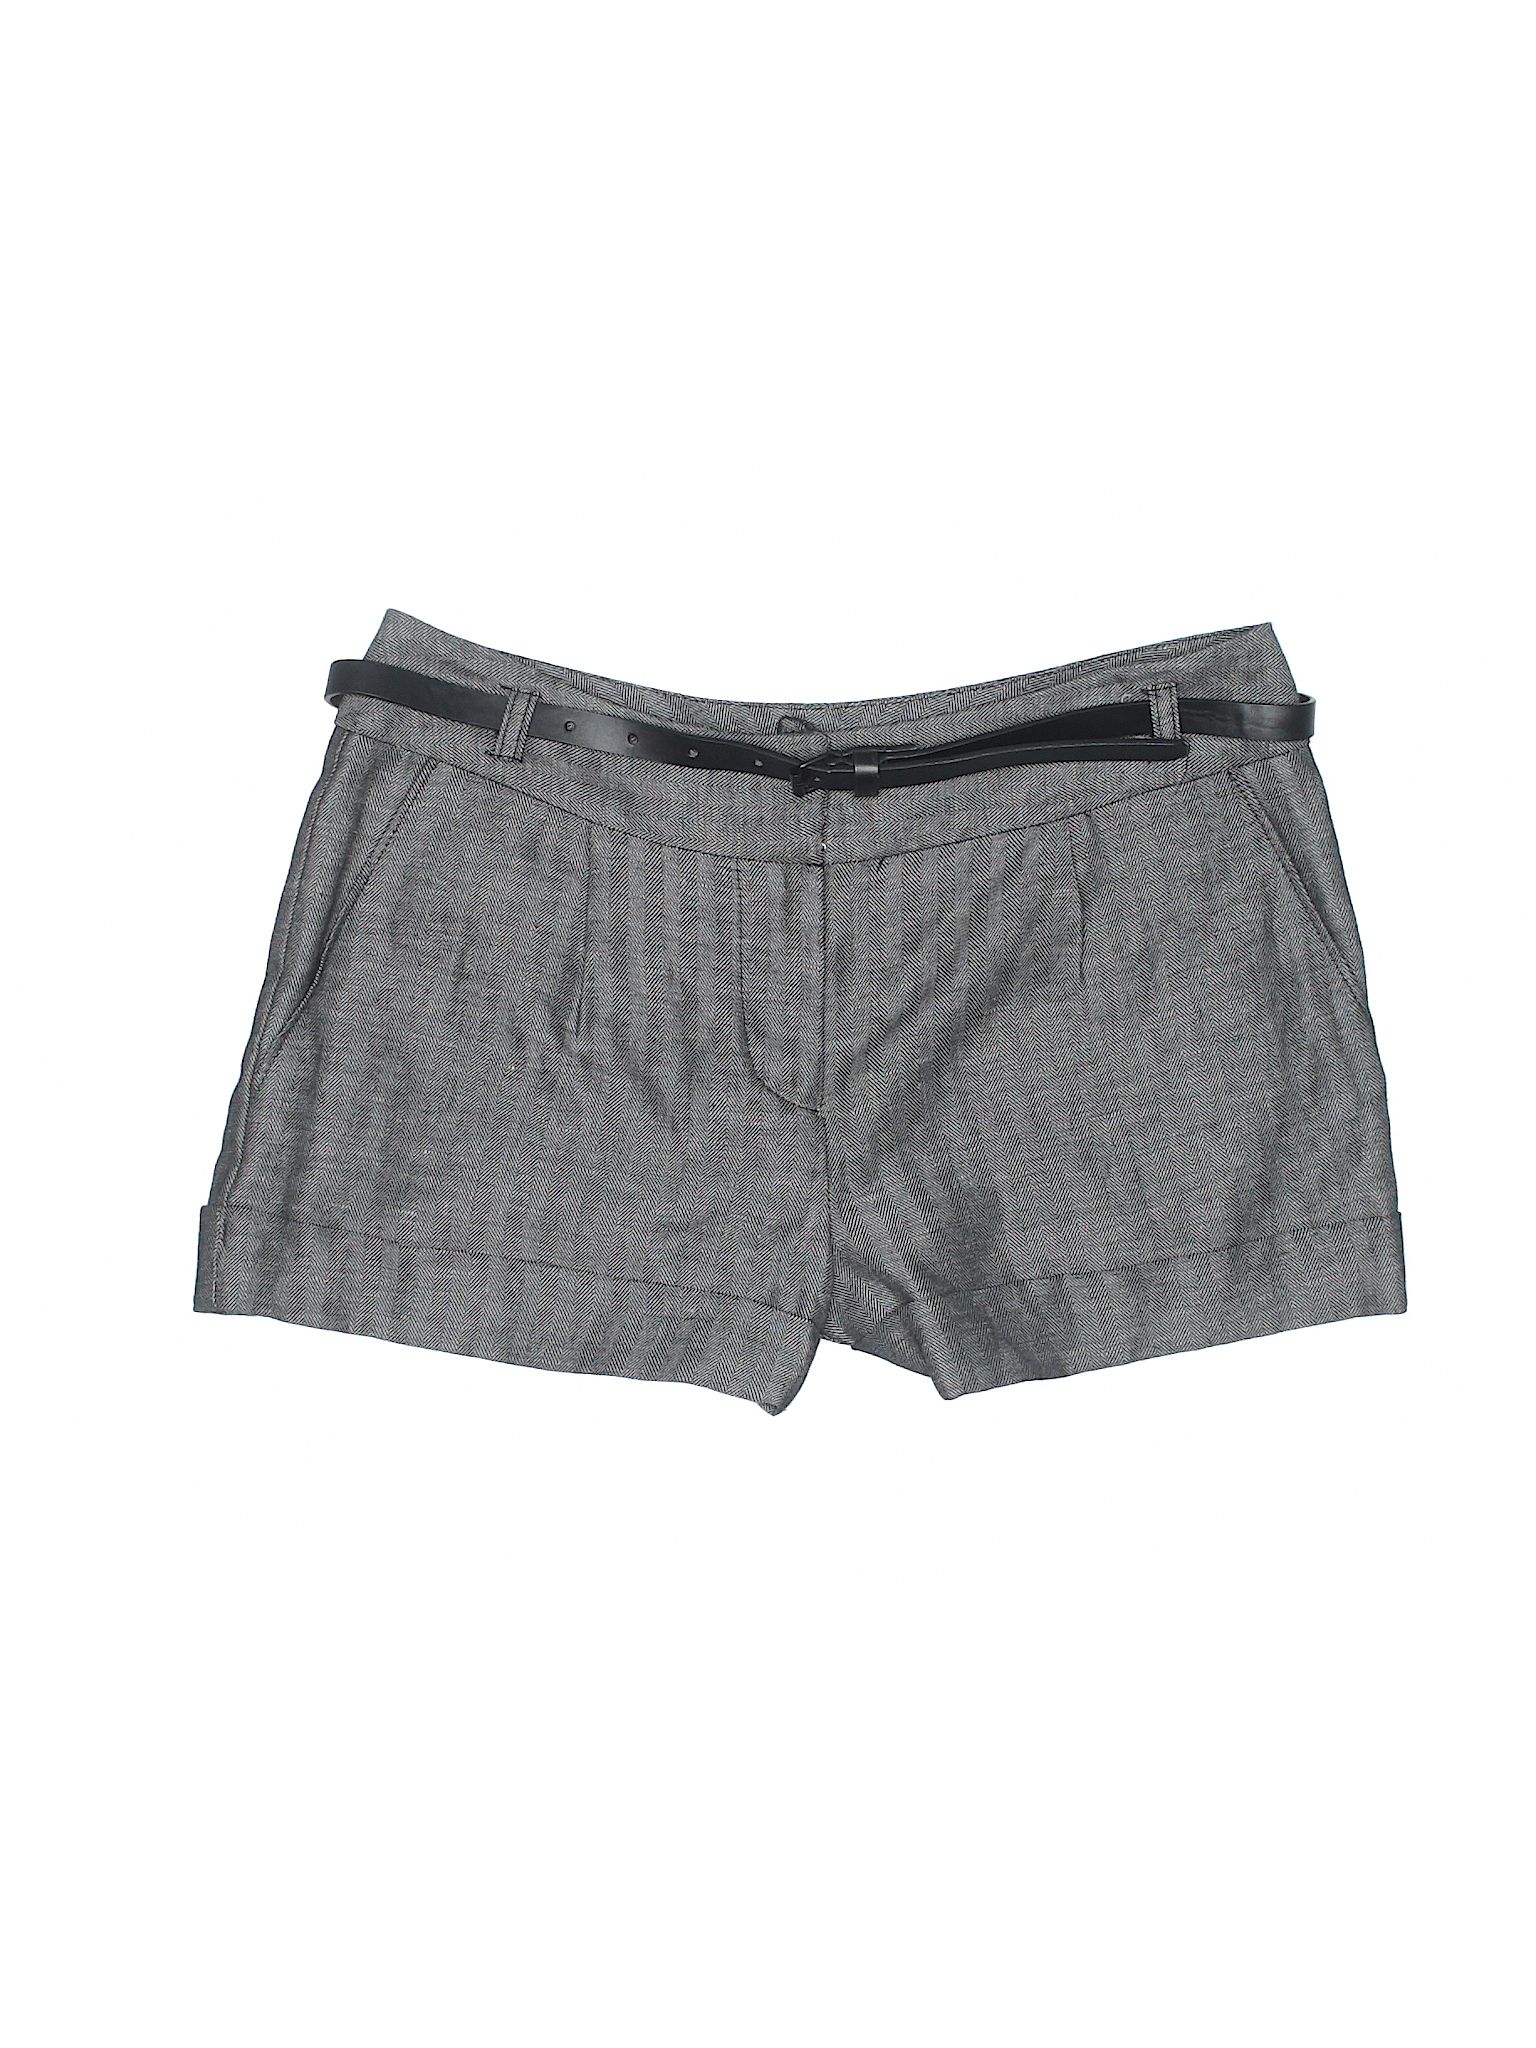 Forever 21 Dressy Shorts Size 0: Gray Women's Bottoms - 31622095 | thredUP